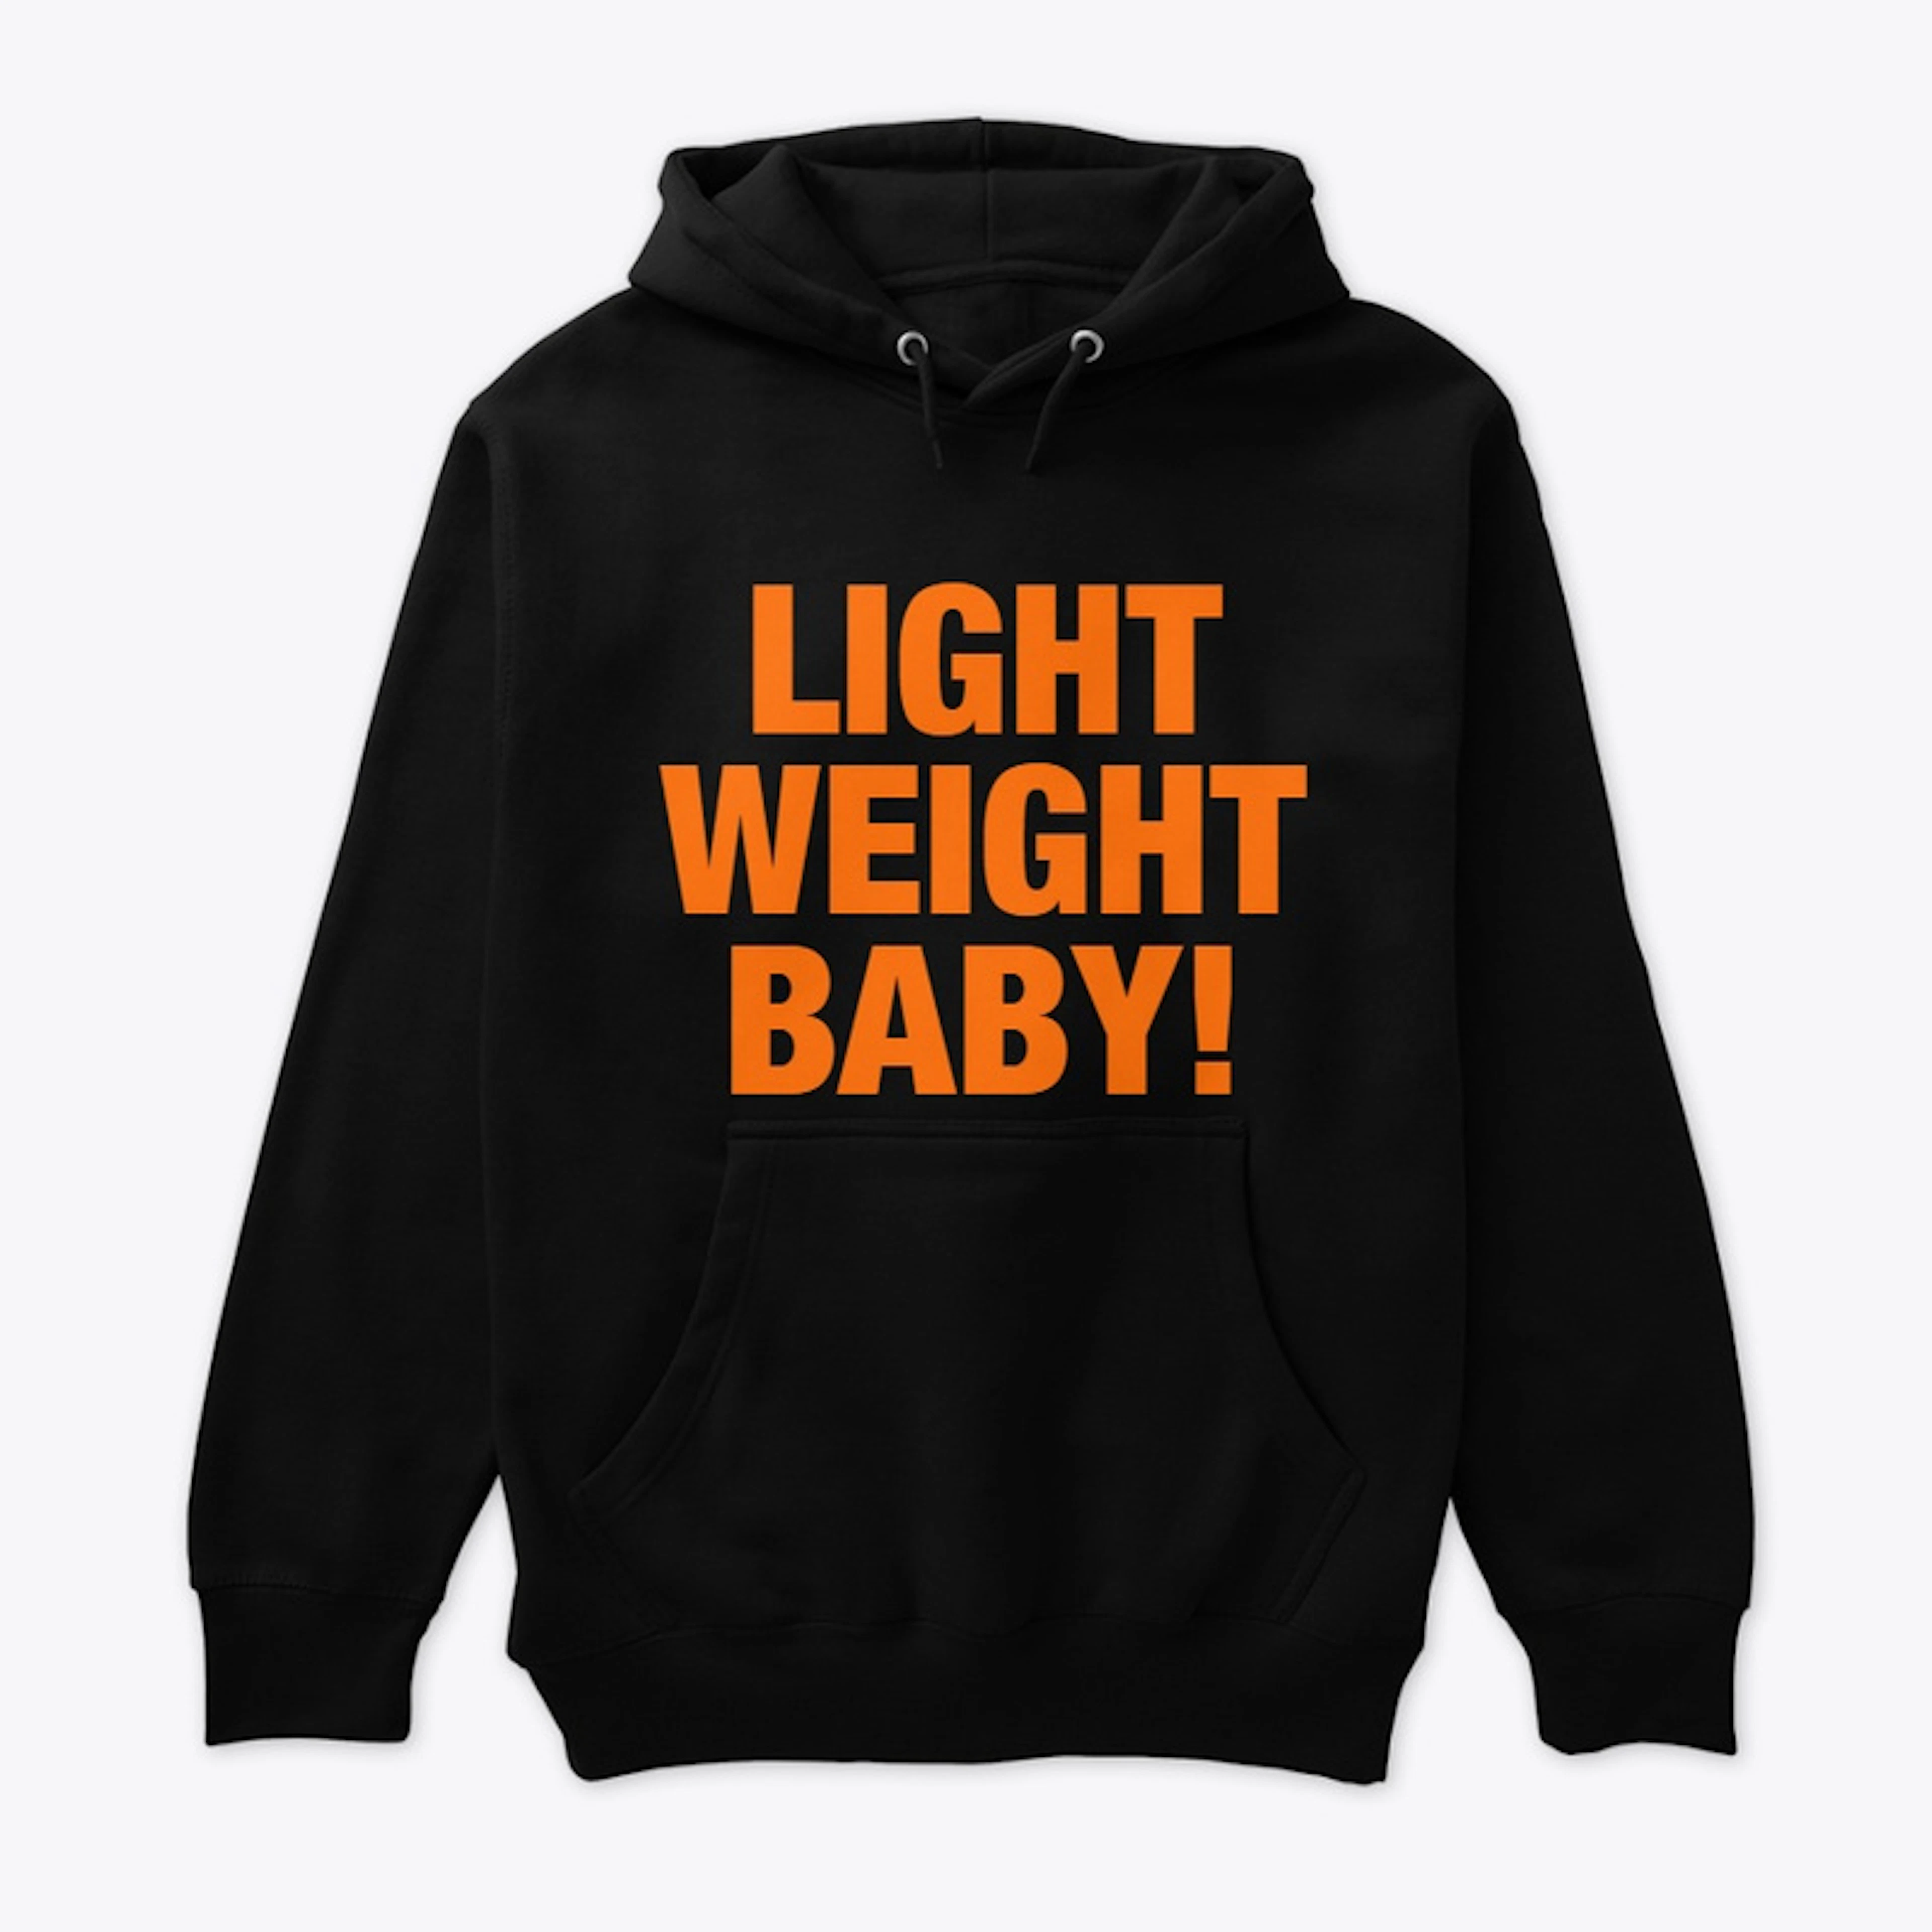 LIGHT WORK BABY! Ronnie Coleman